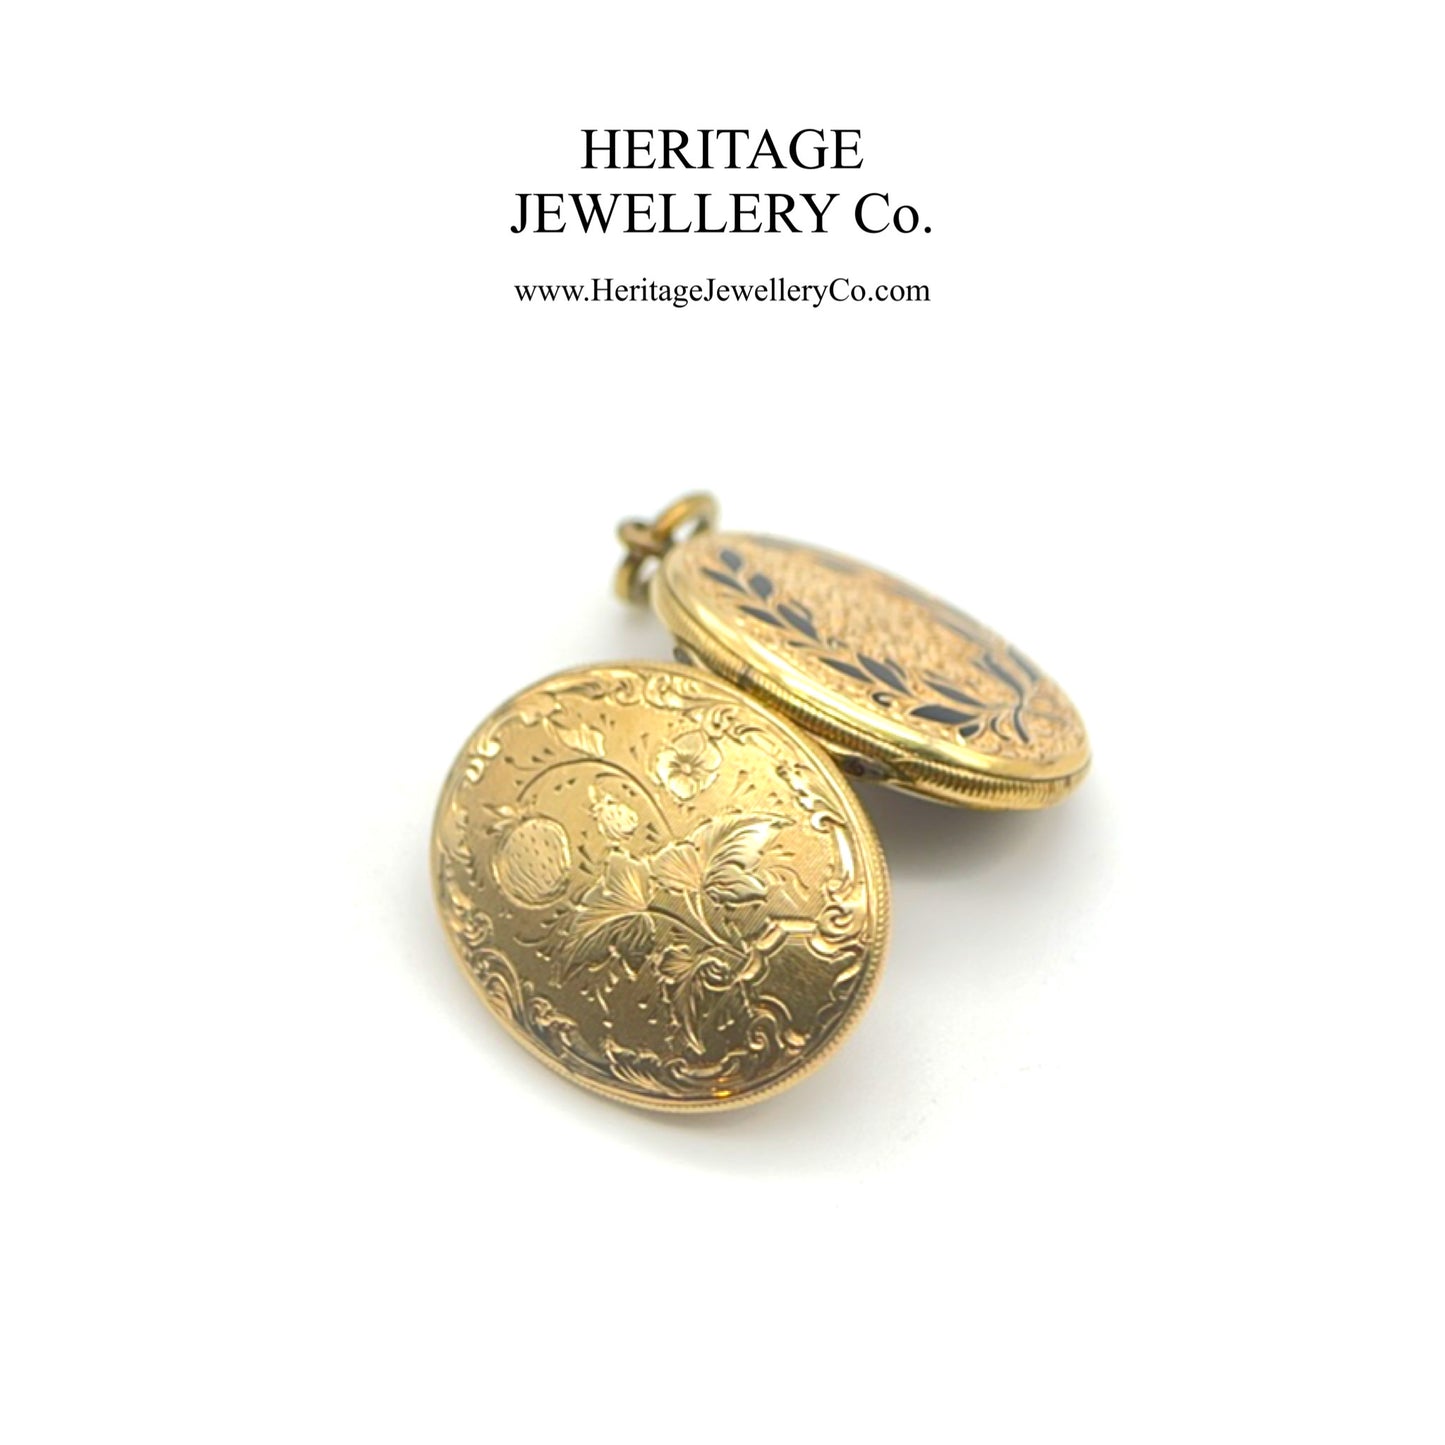 Antique Gold and Enamel Mourning Locket